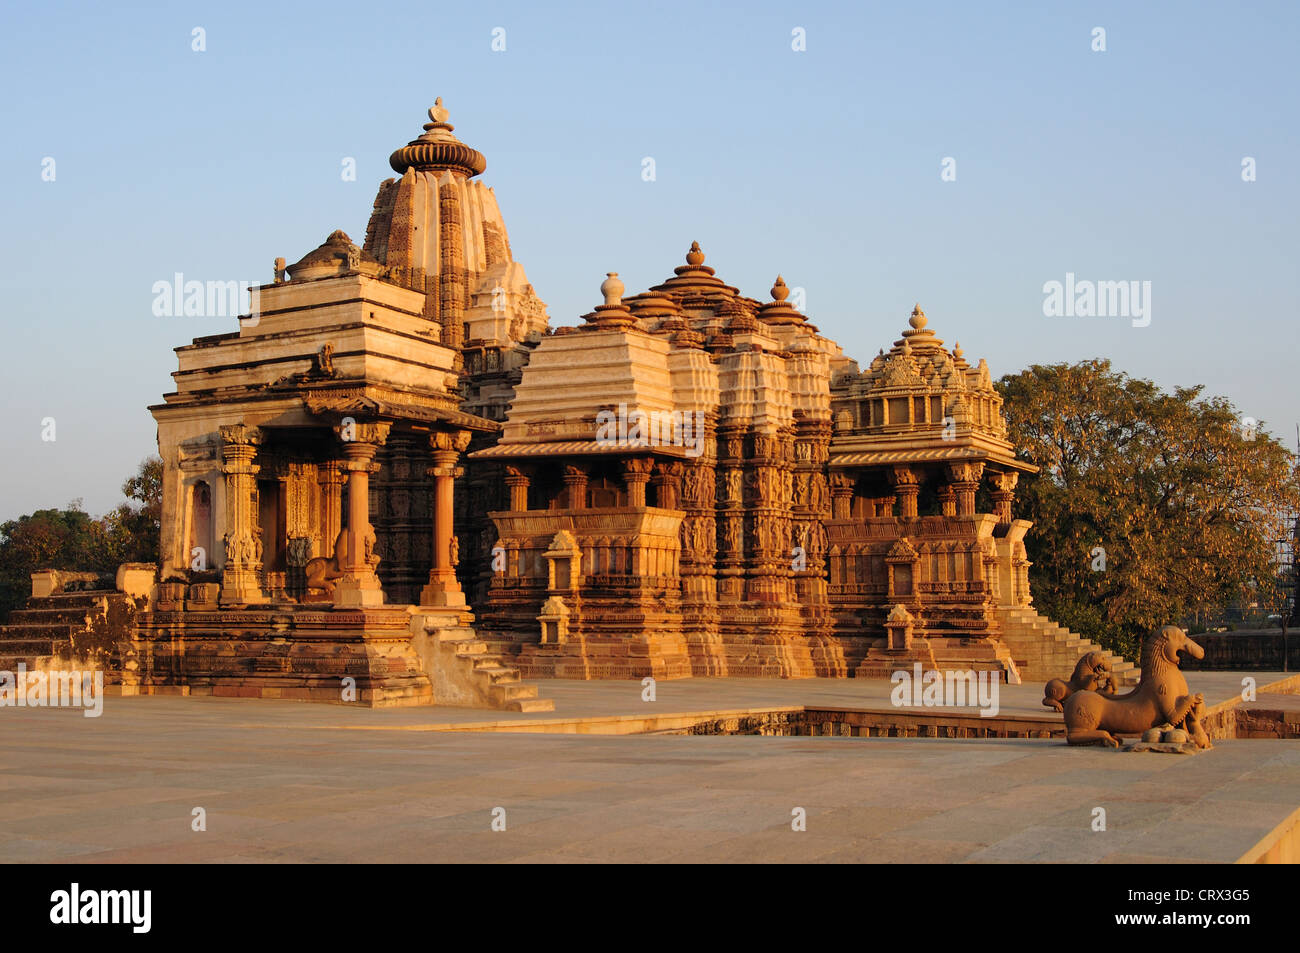 Kandariya Mahadev temple, Western group of temples, Khajuraho, Madhya Pradesh, India Stock Photo